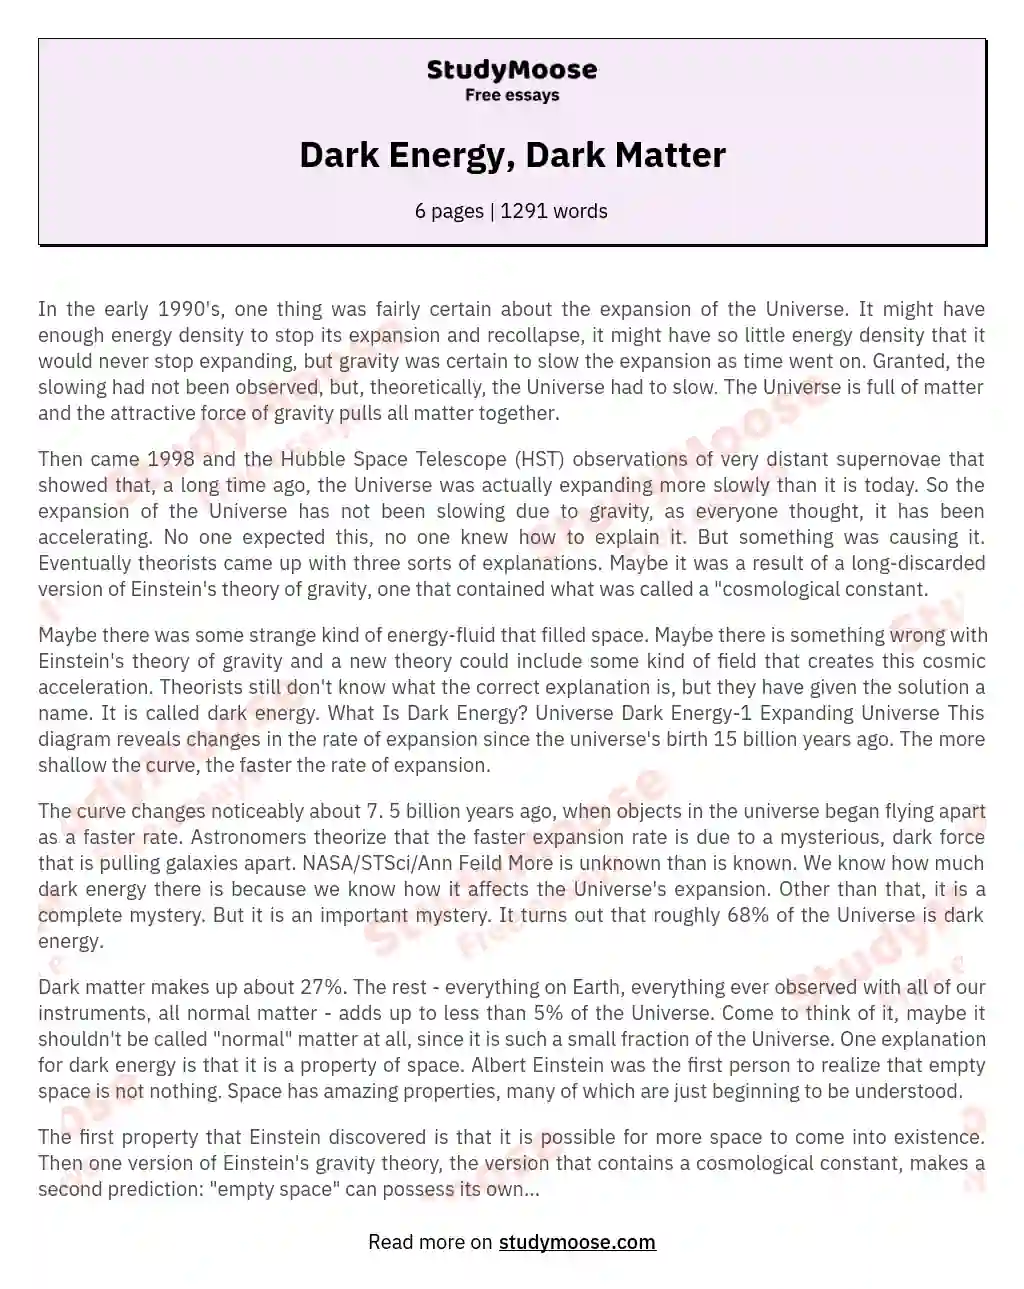 Dark Energy, Dark Matter essay